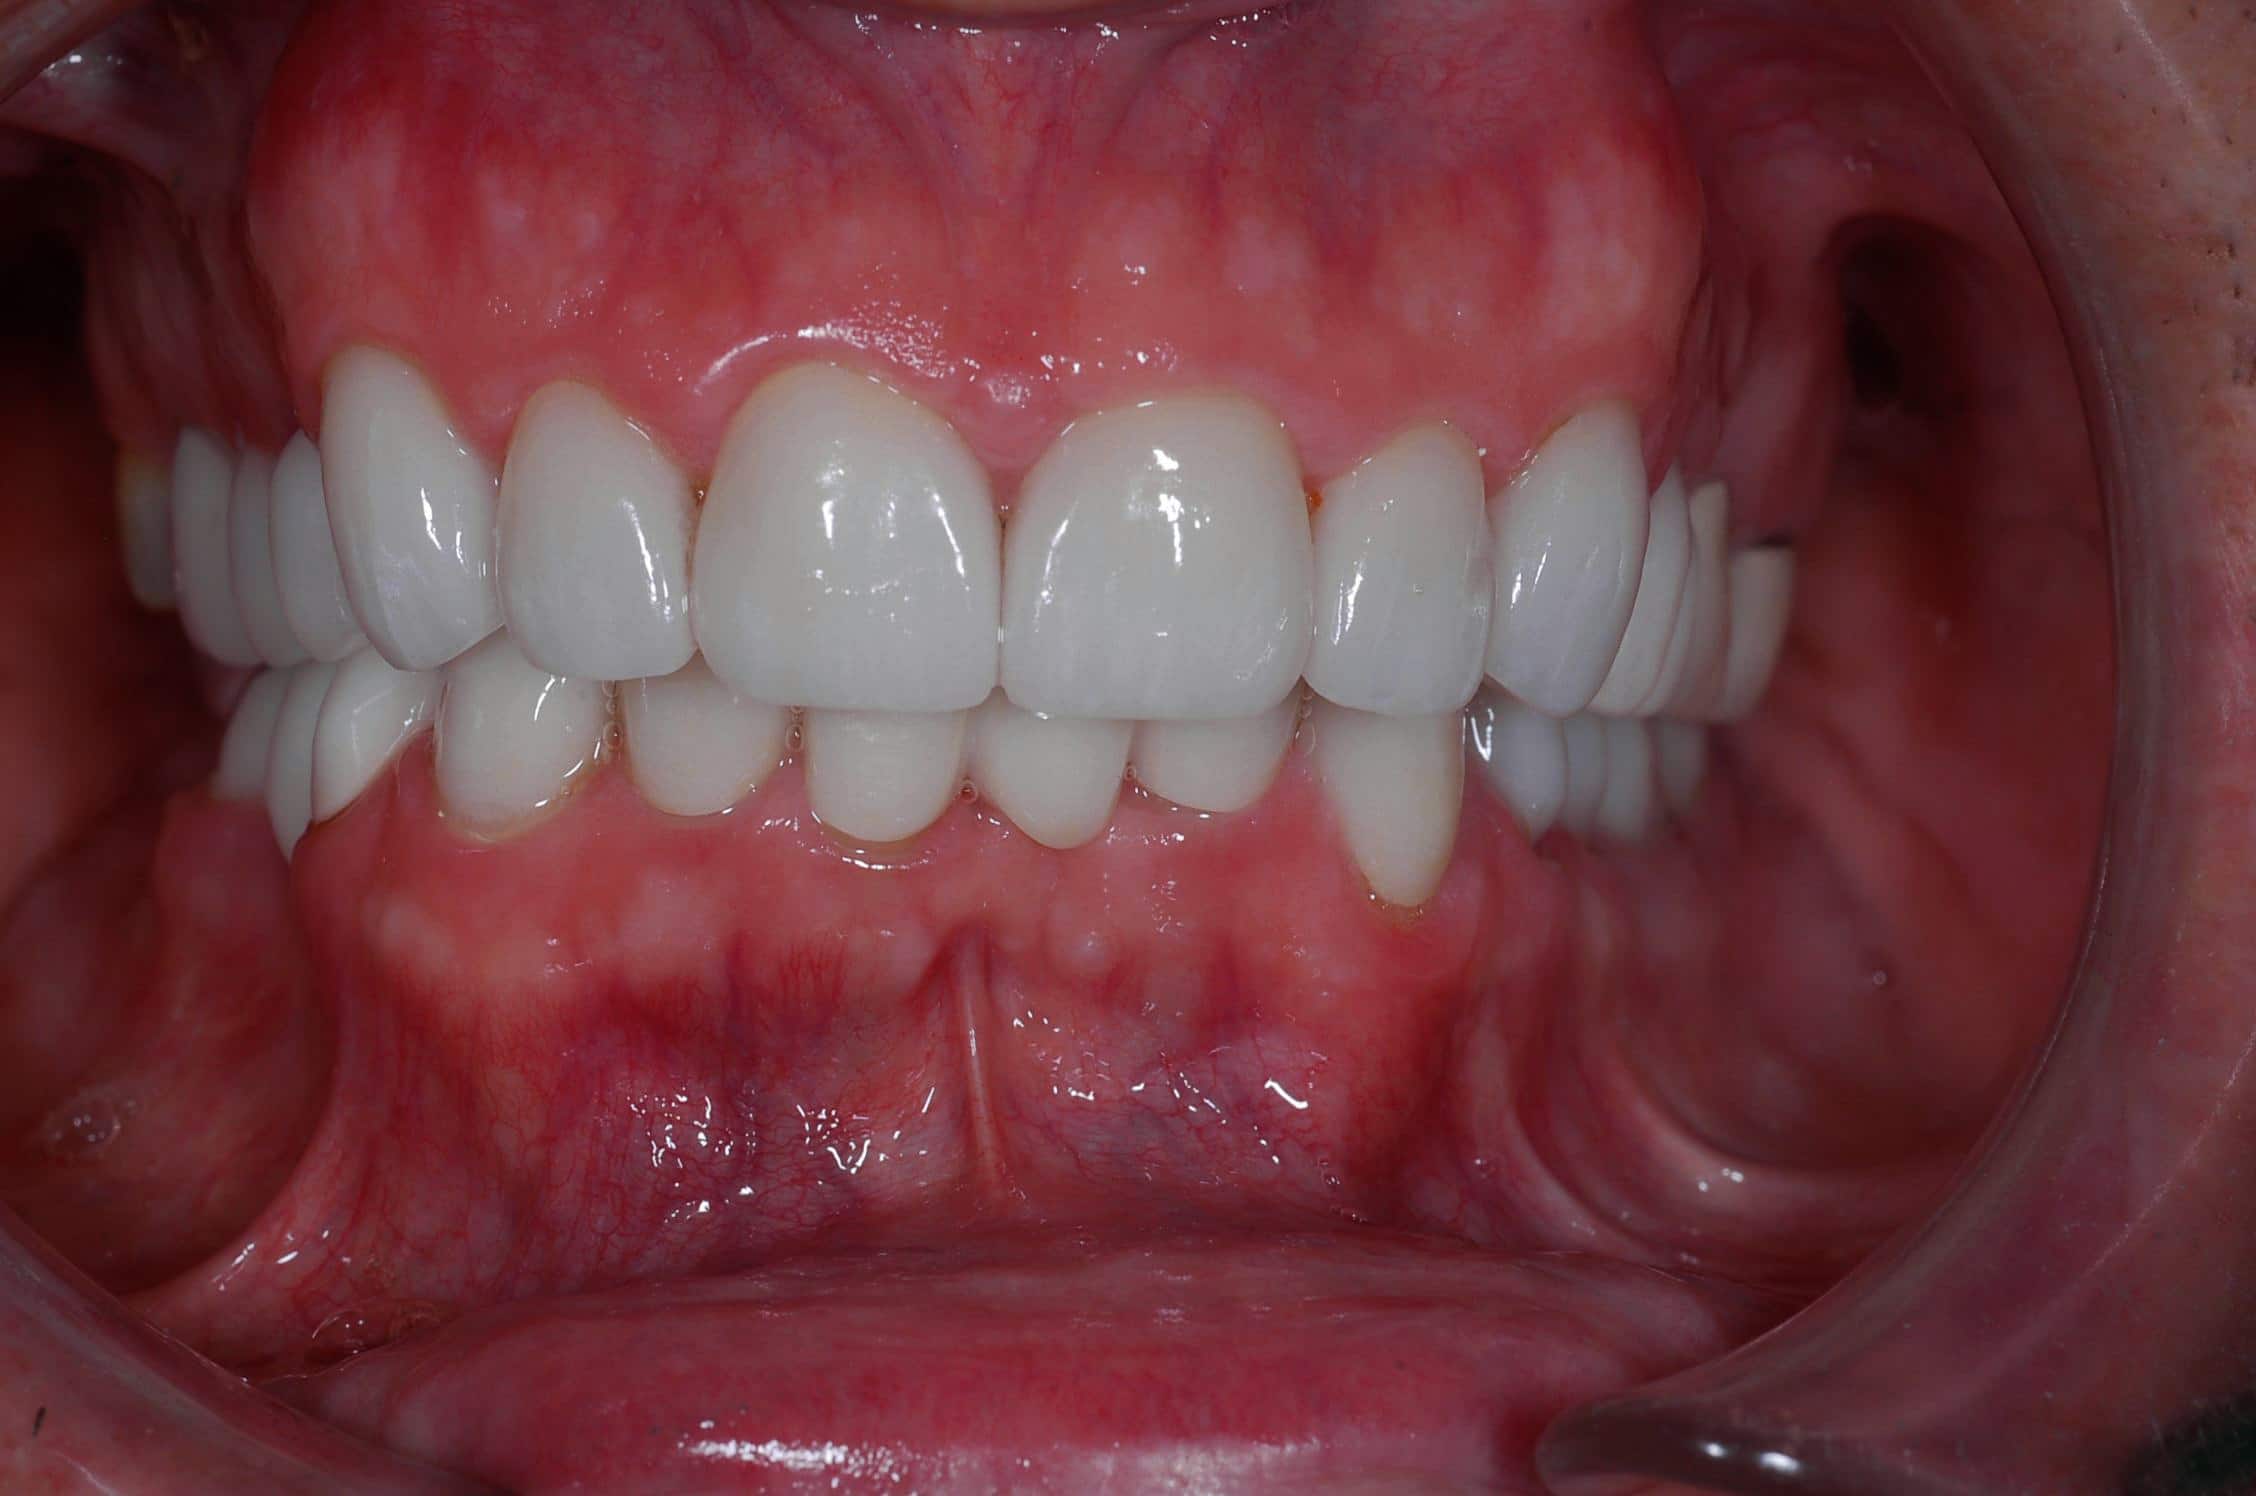 eroding translucent tooth